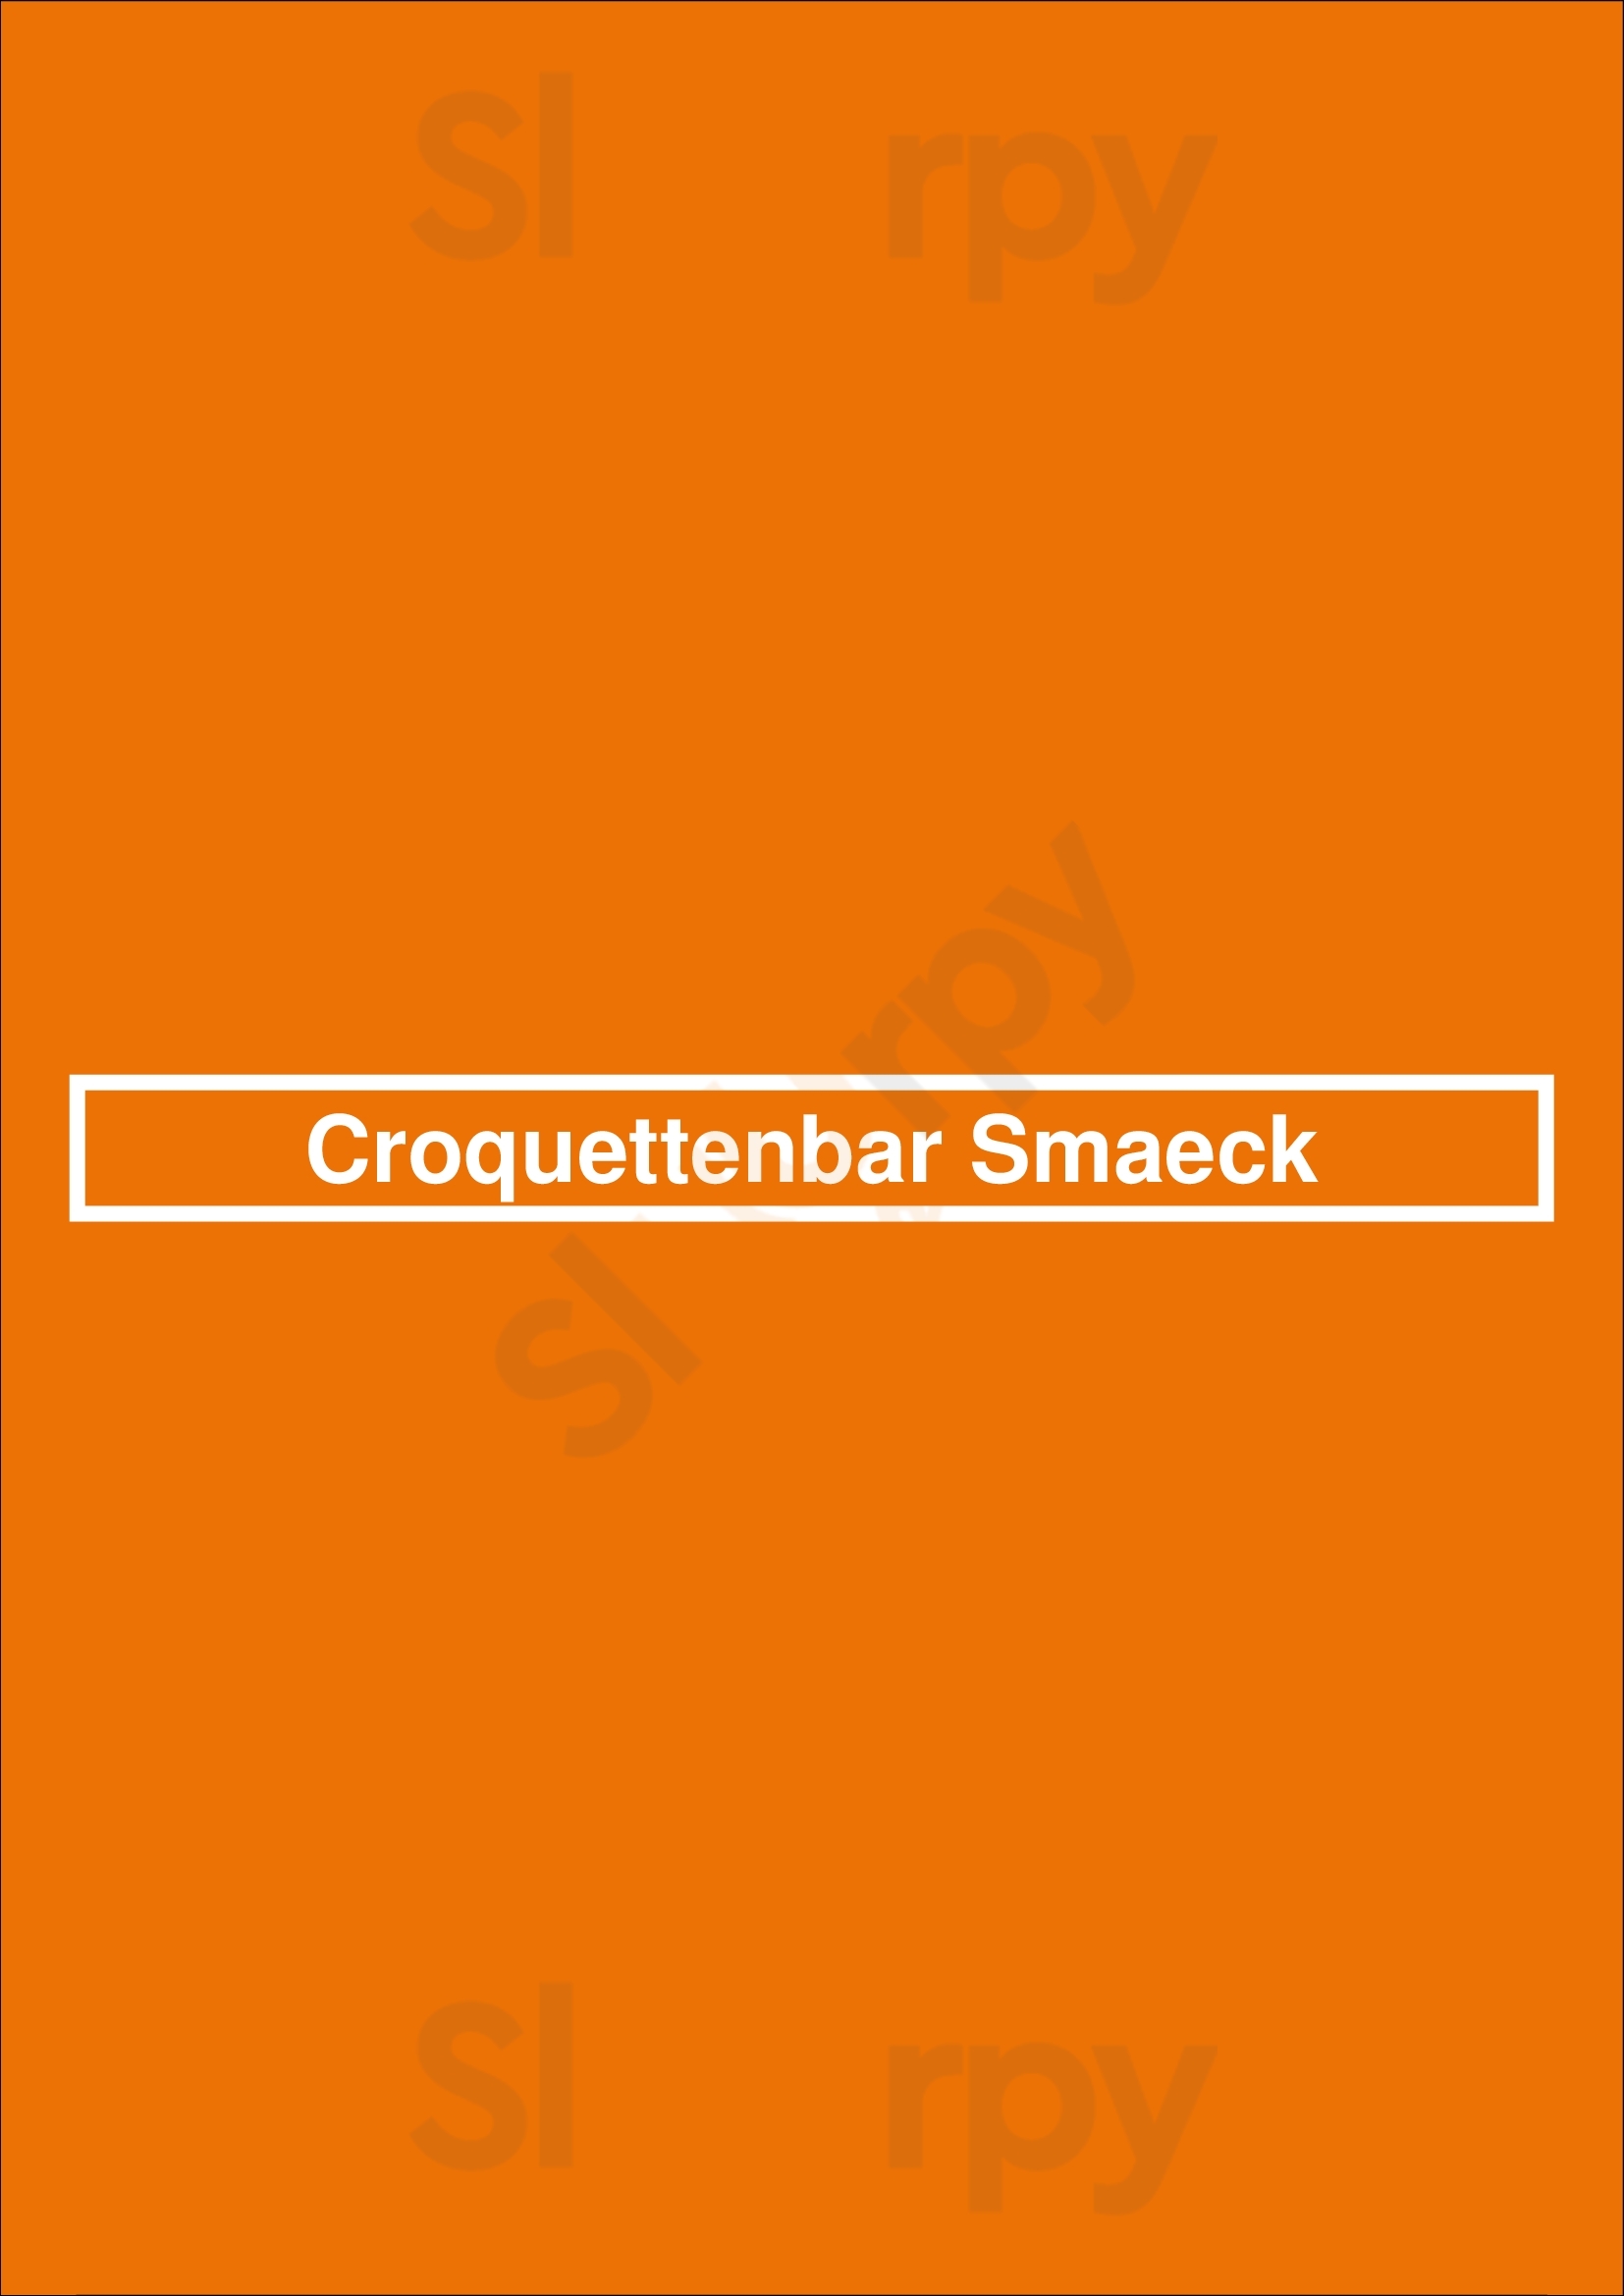 Croquettenbar Smaeck Anvers Menu - 1